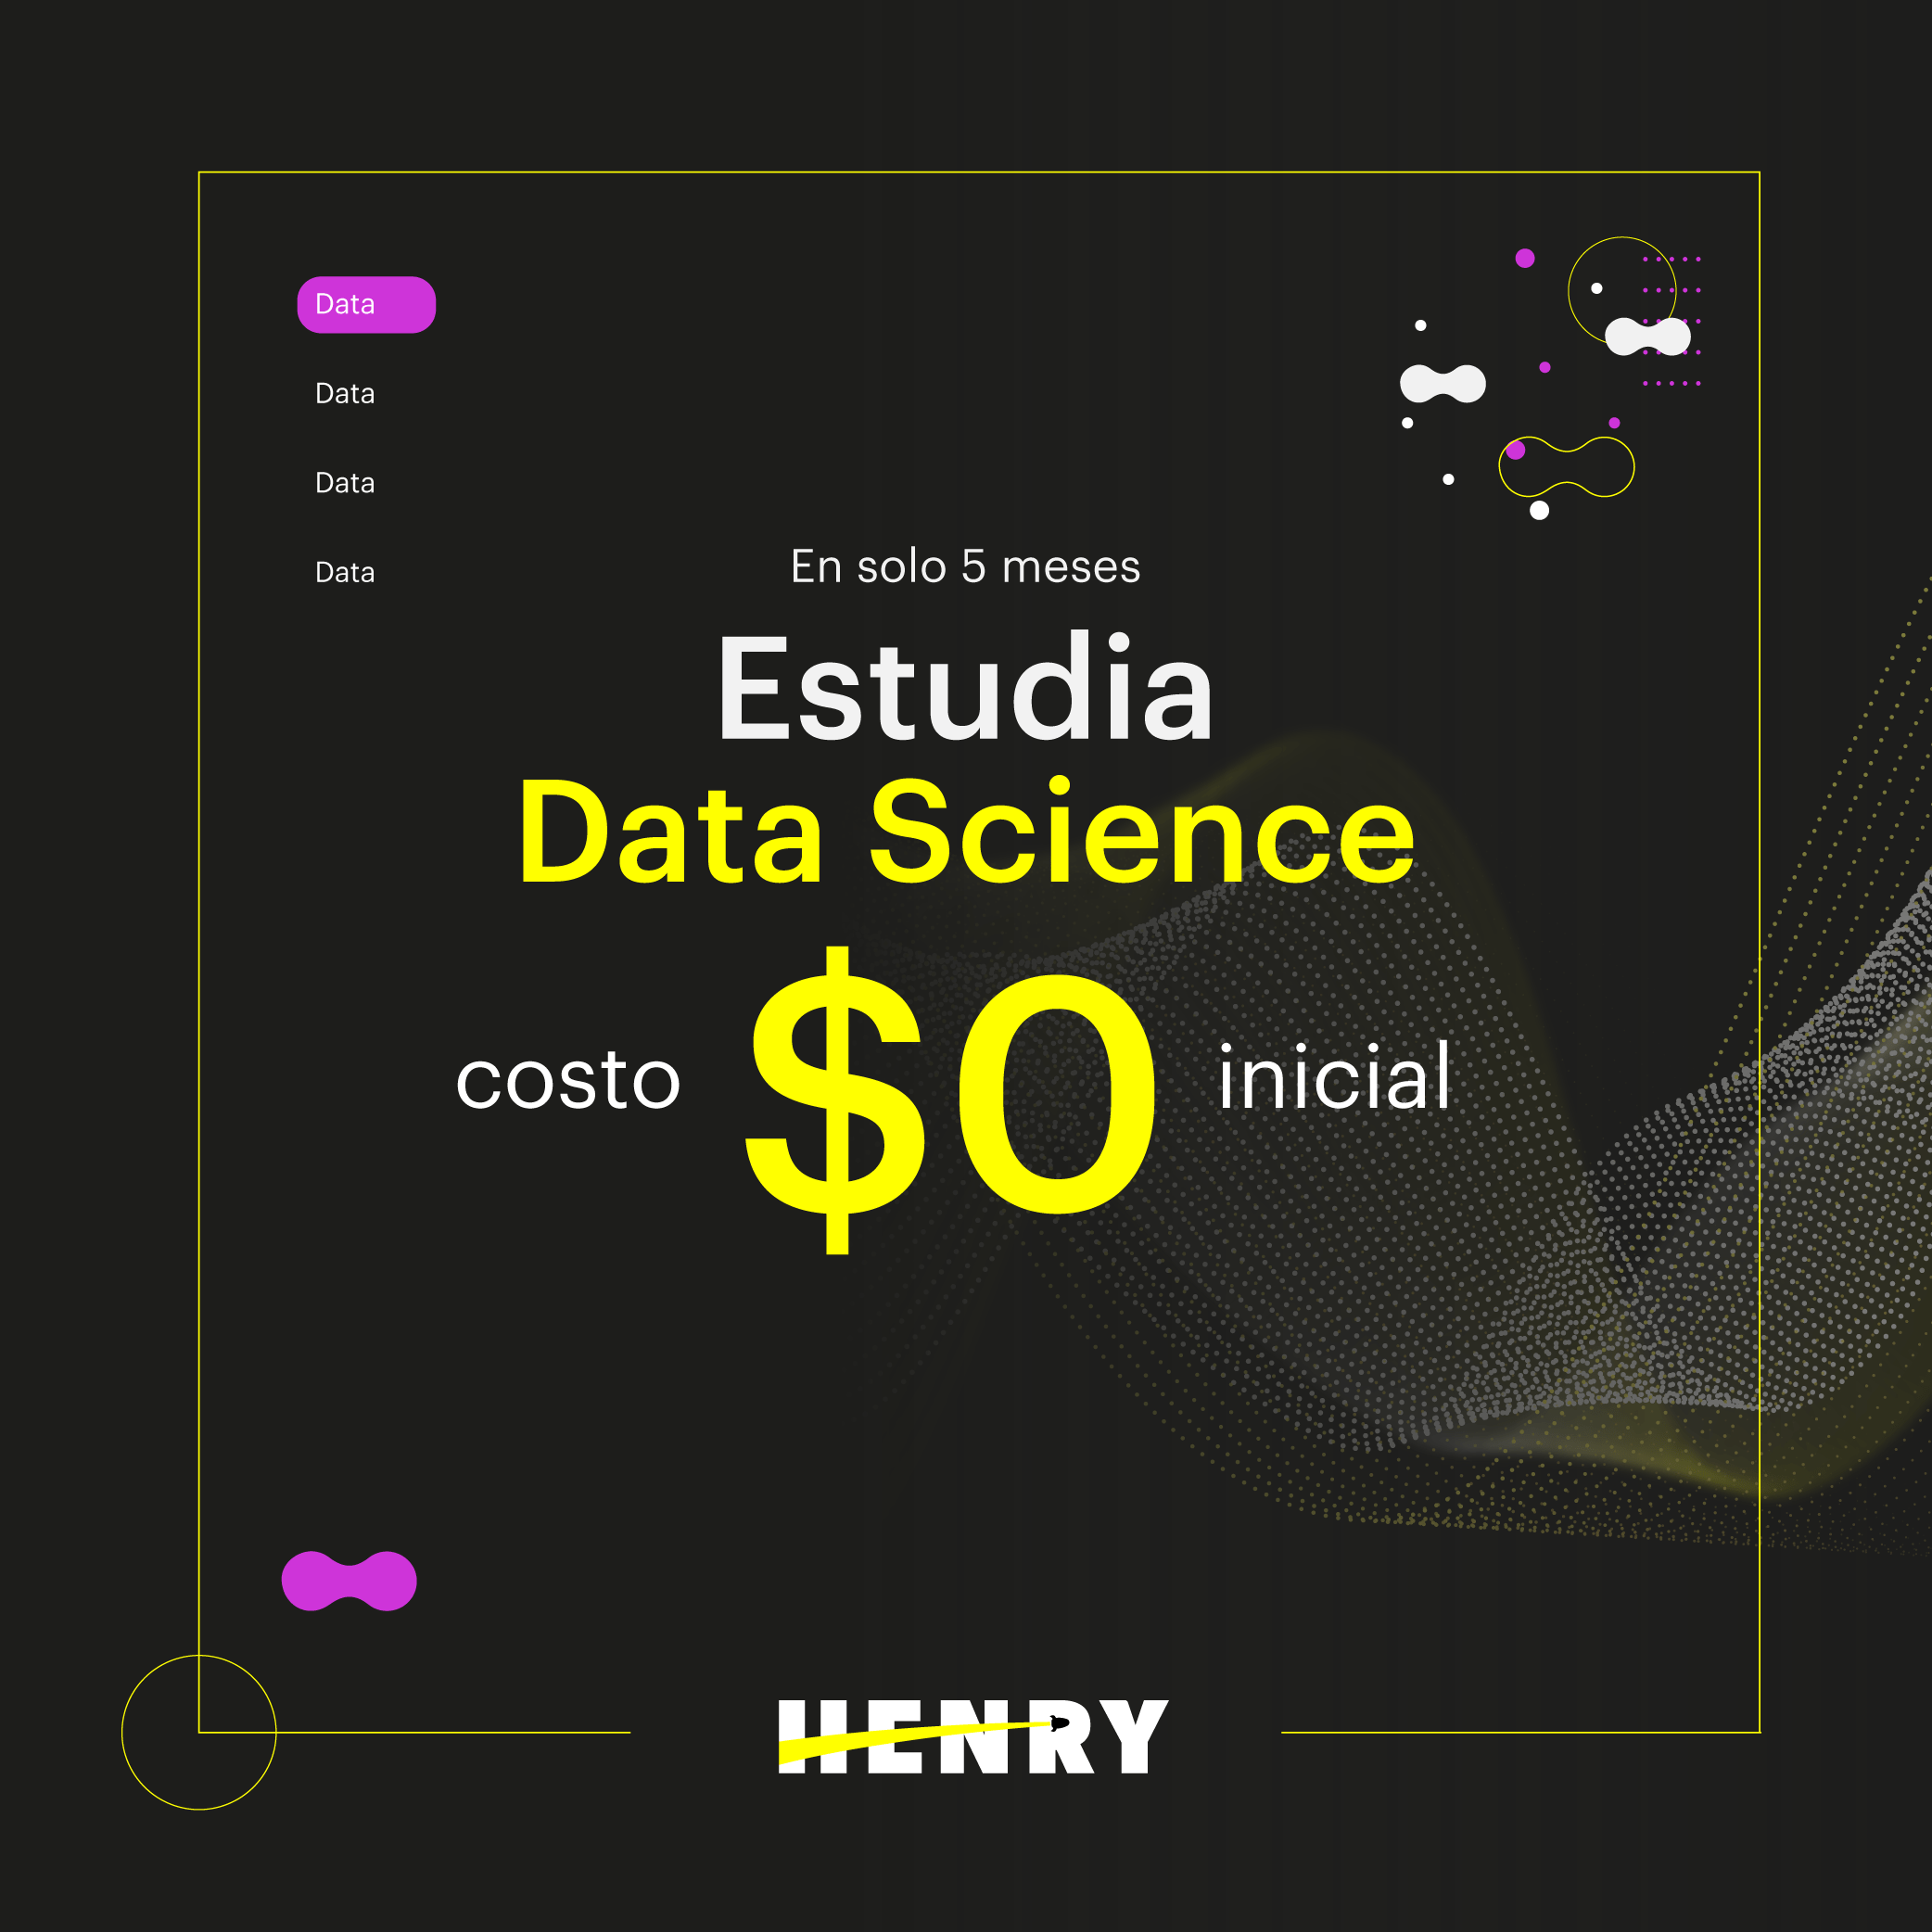 Carrera Data Science - $0 costo inicia | Henry